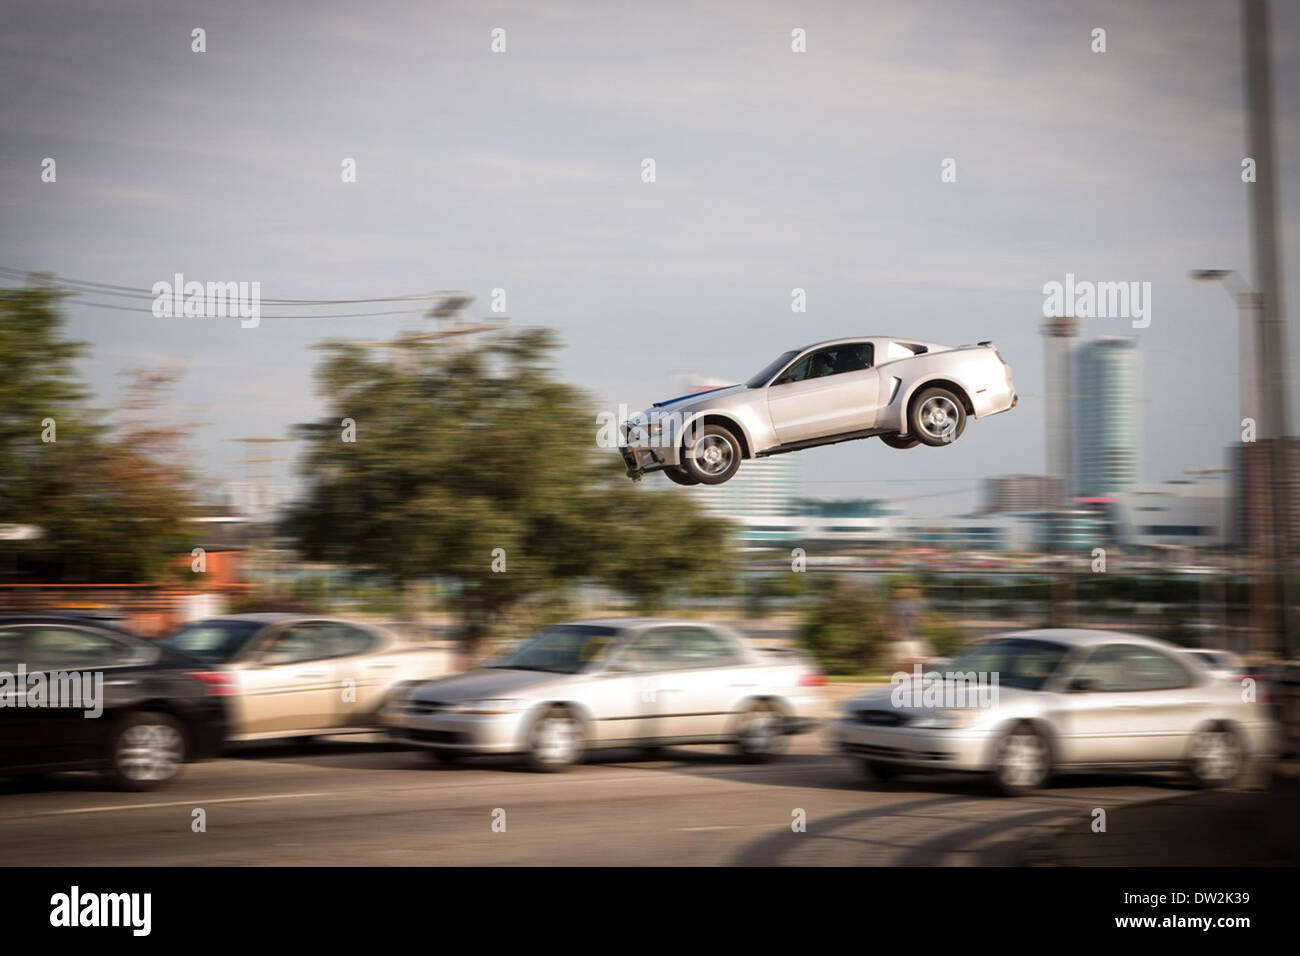 Video: Behind-the-Scenes of Need For Speed 2014 Film - GTspirit